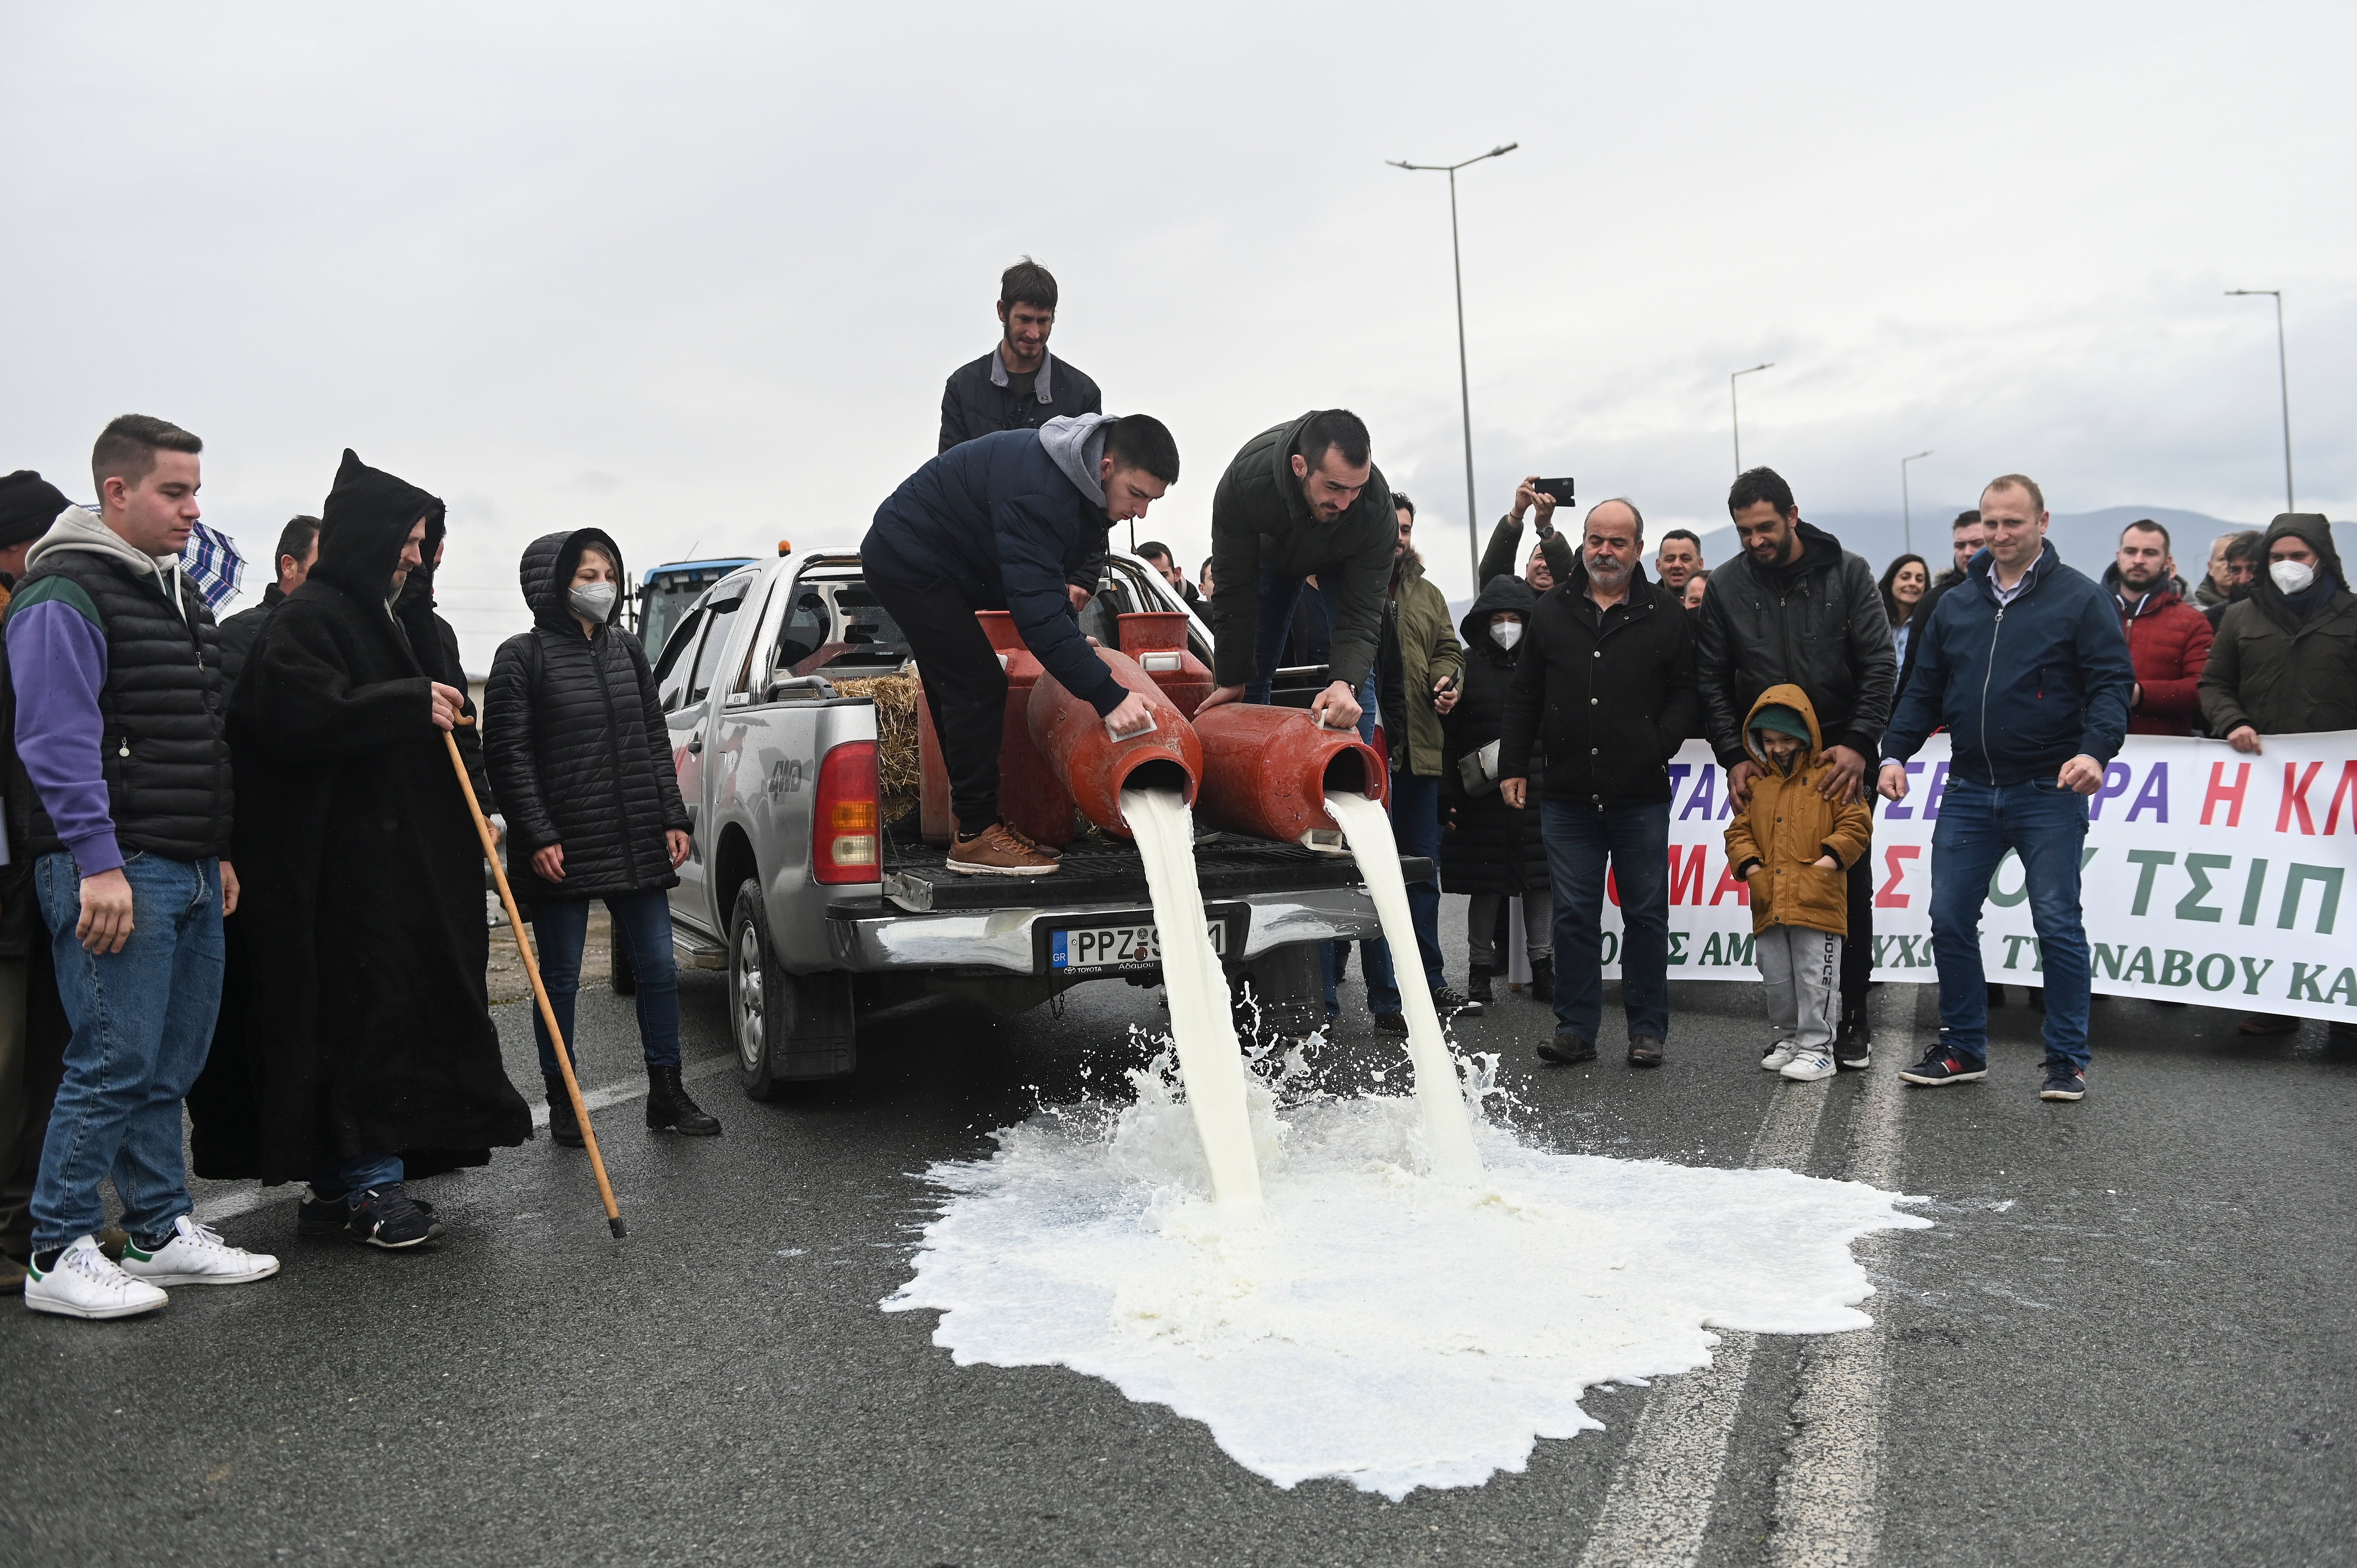 GRECIA AGRICULTORES PROTESTA